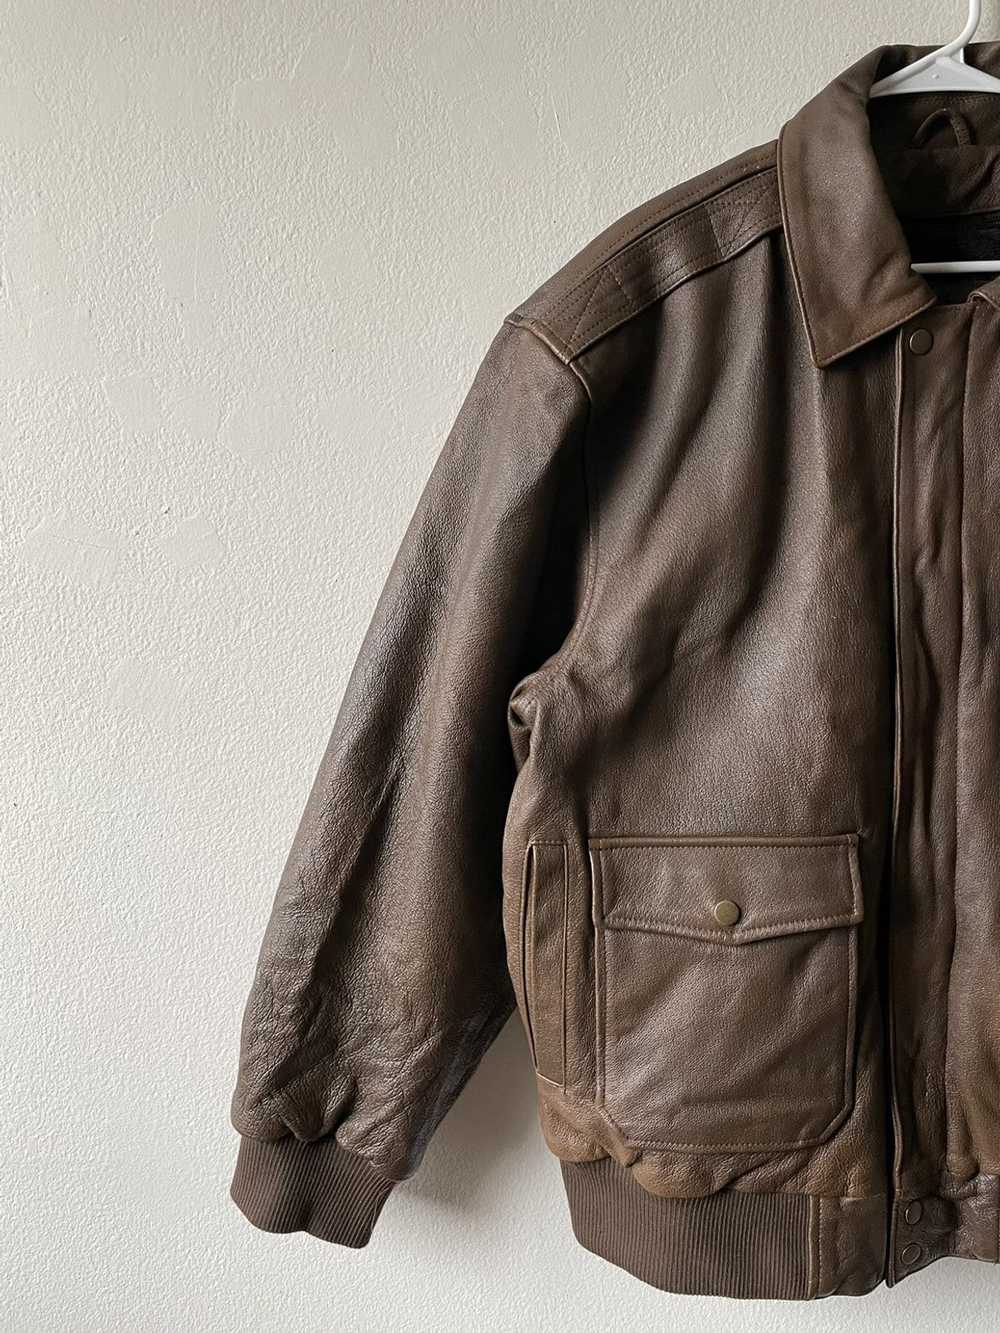 Vintage Vintage brown leather jacket - image 2